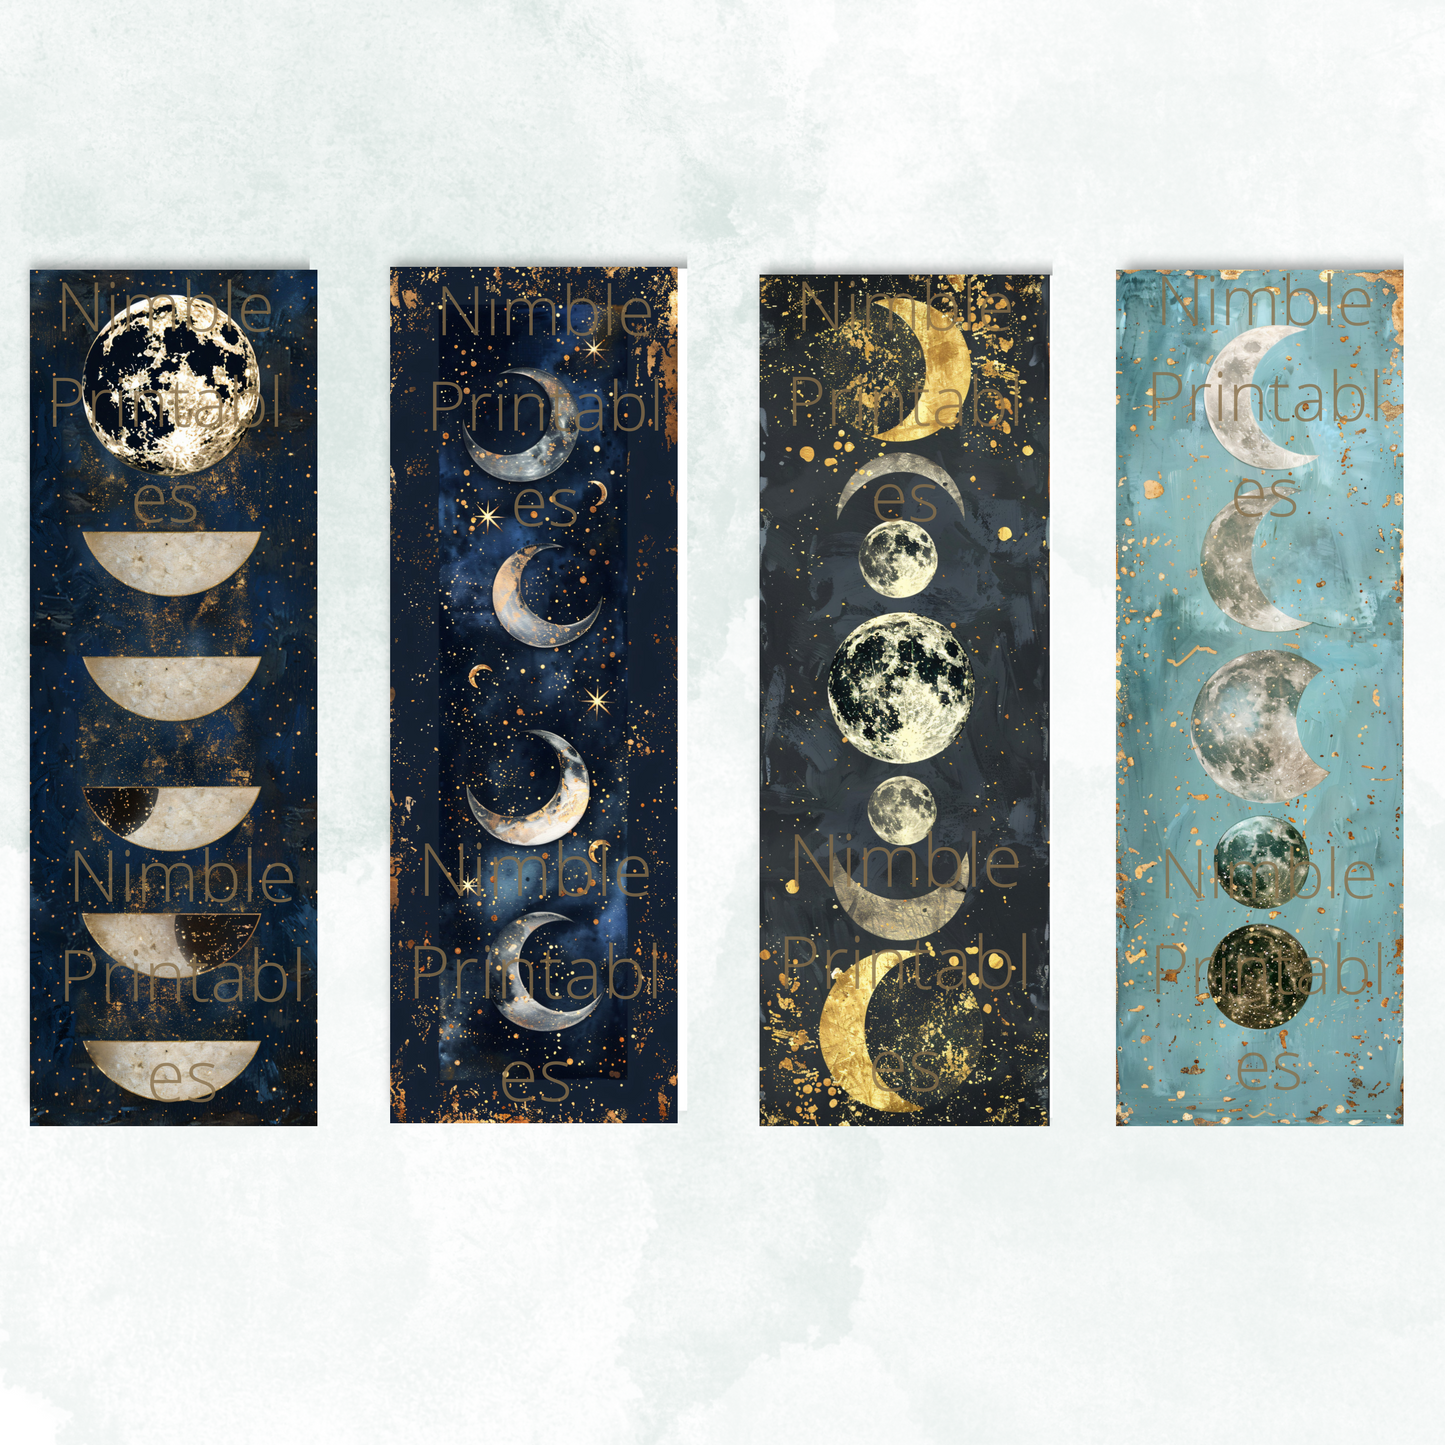 Printable Bookmarks Bundle Celestial Moon, Digital Downloads, Watercolor Bookmark, 40 PNG and 40 JPG Bookmark Sublimation Celestial Print